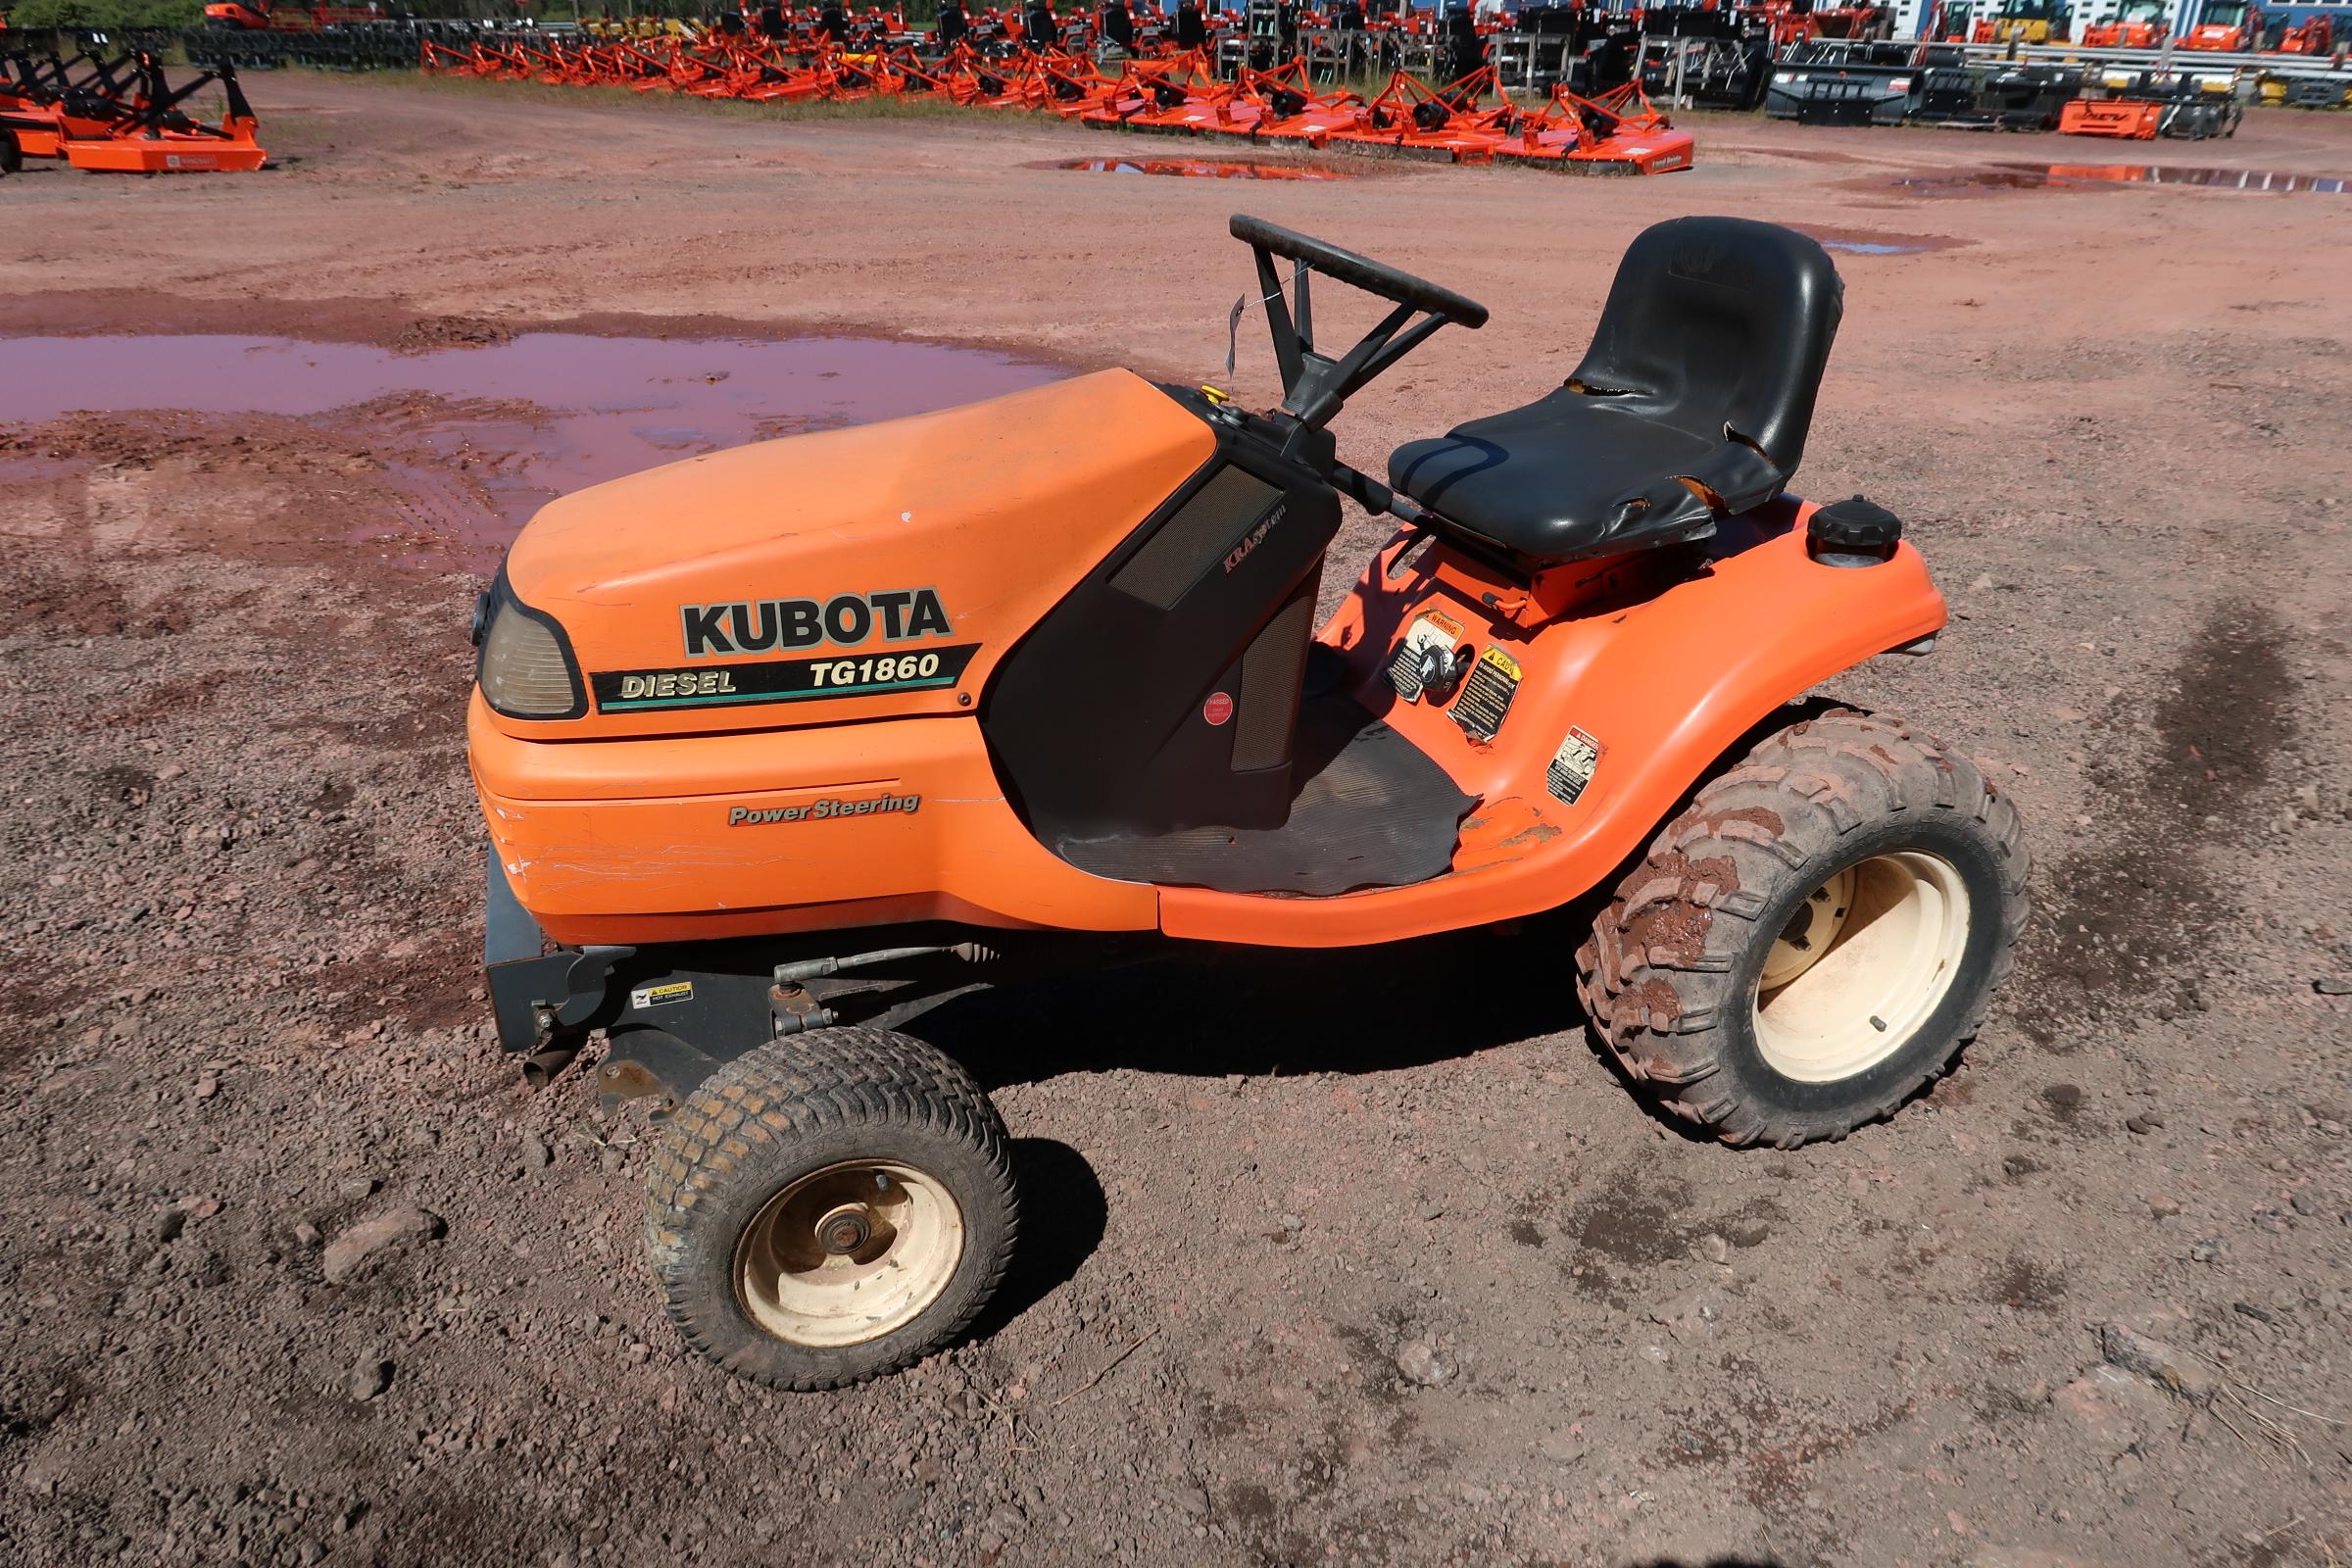 Kubota TG1860 Lawn Tractor